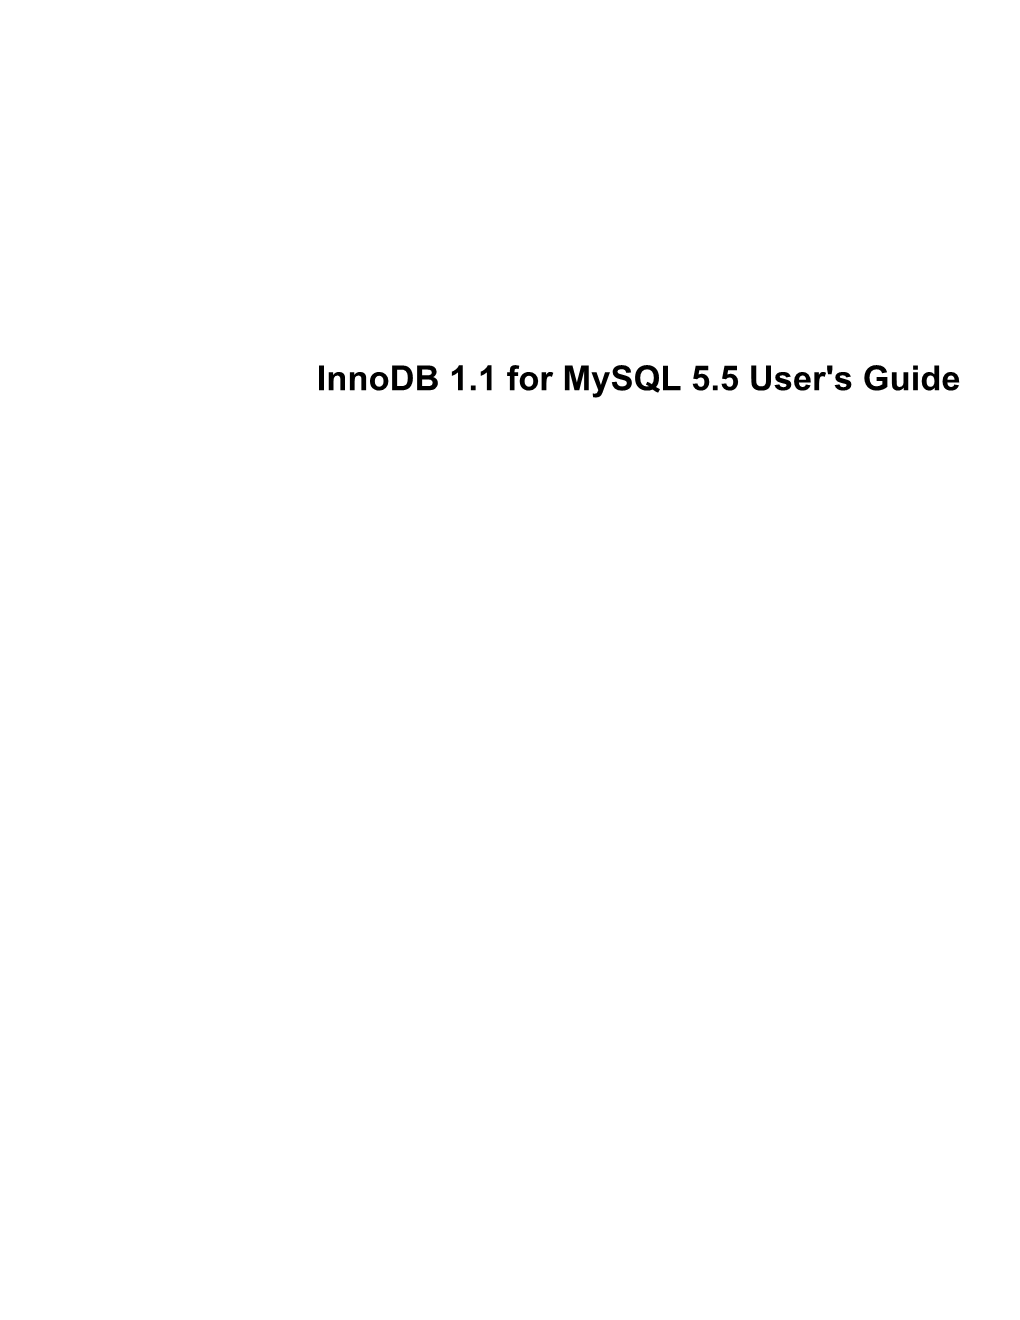 Innodb 1.1 for Mysql 5.5 User's Guide Innodb 1.1 for Mysql 5.5 User's Guide